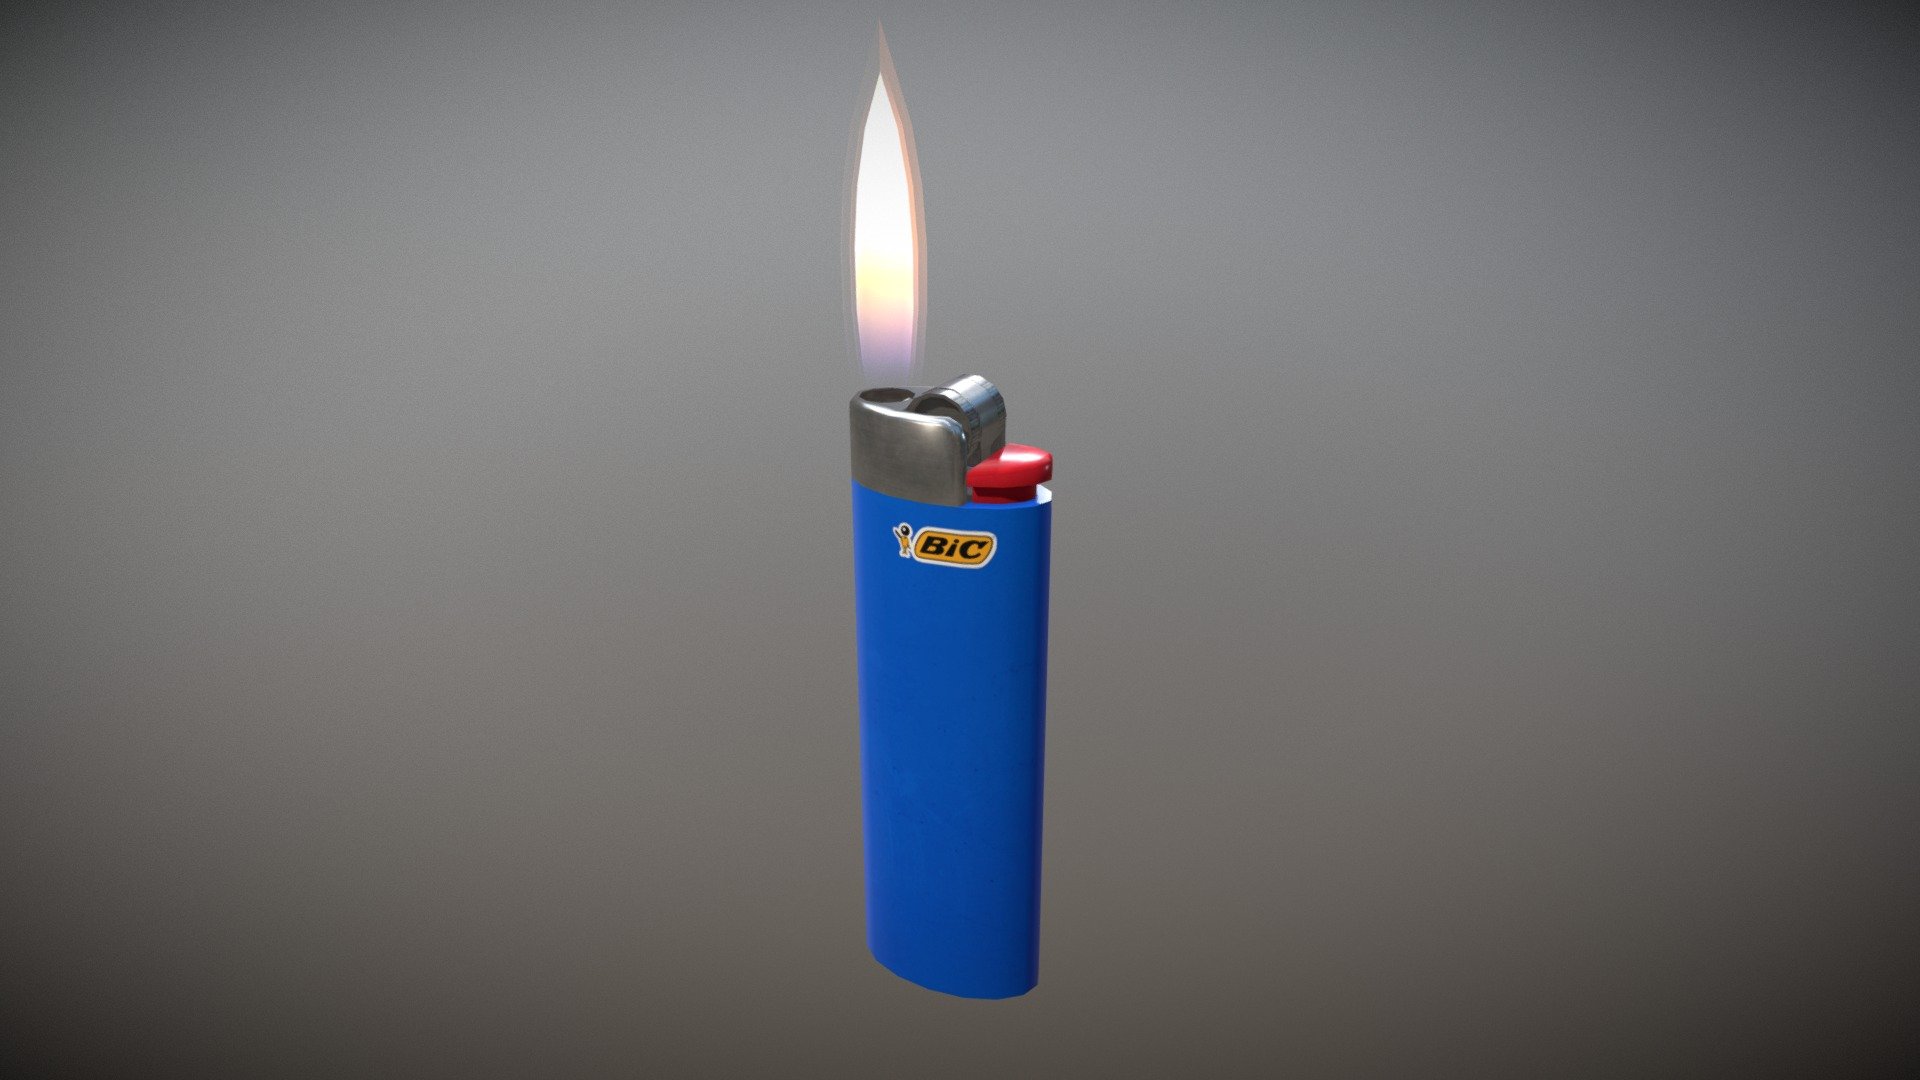 Bic Lighter - 3D model by mitchell_read 3d model